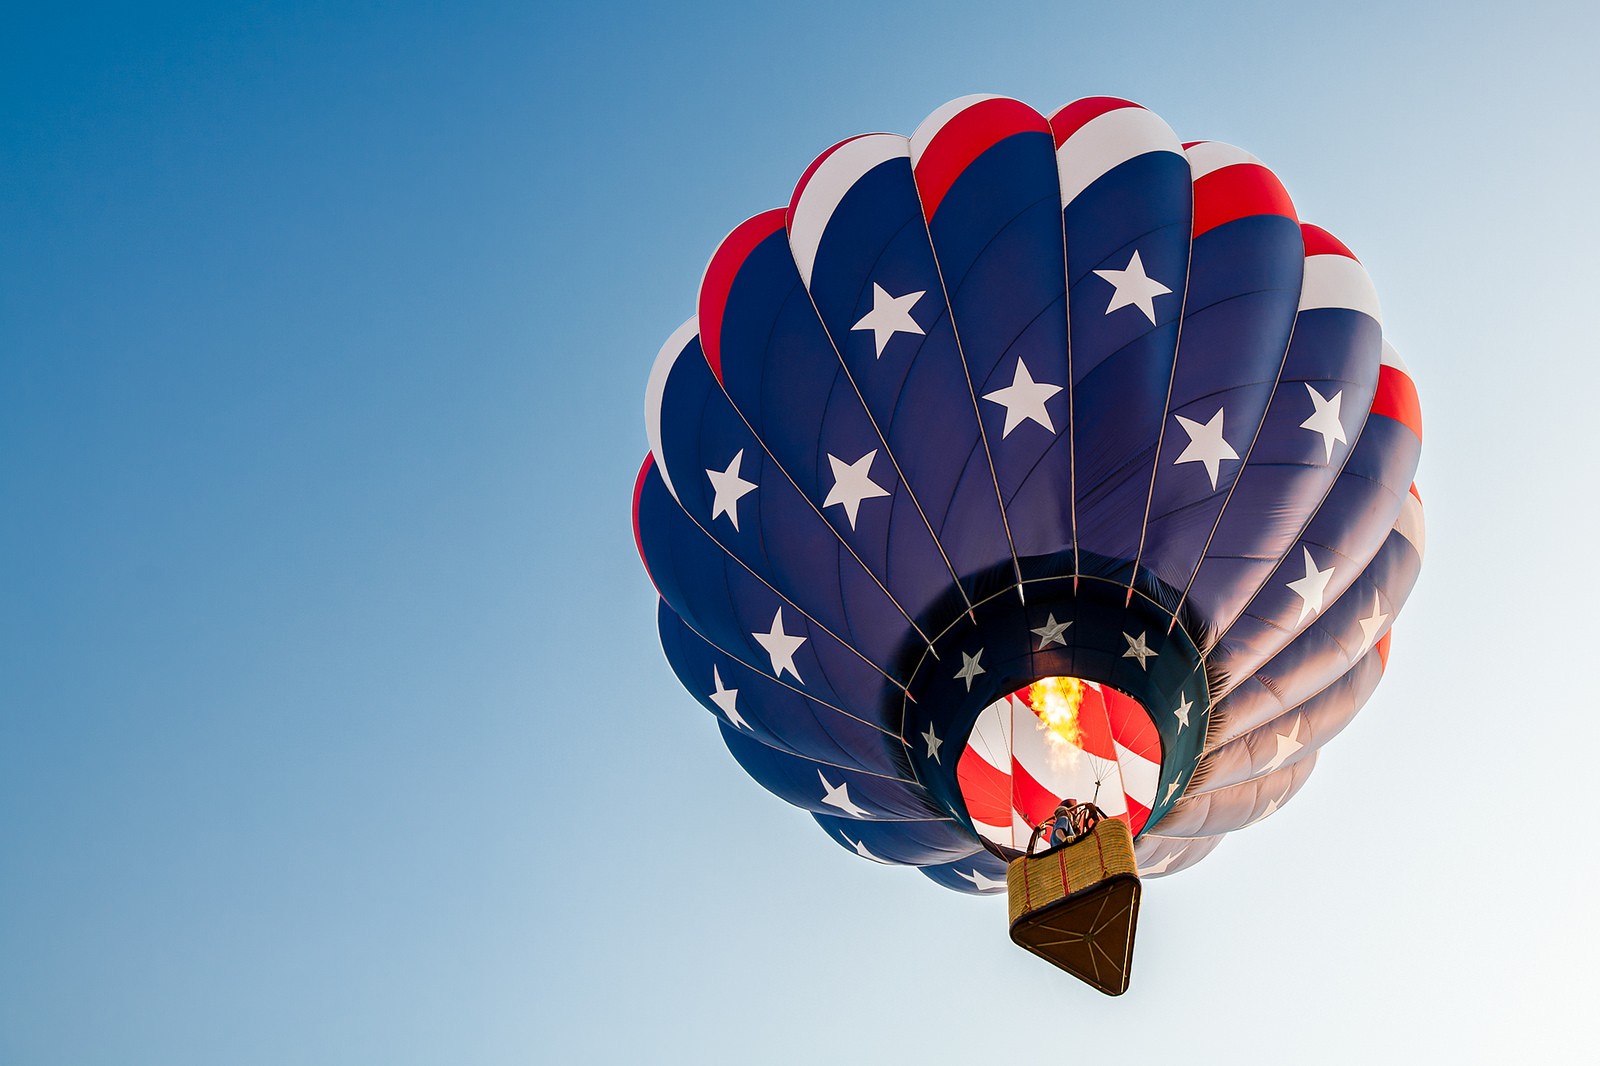 General 1600x1066 flag hot air balloons American flag outdoors USA clear sky sky blue vehicle sky